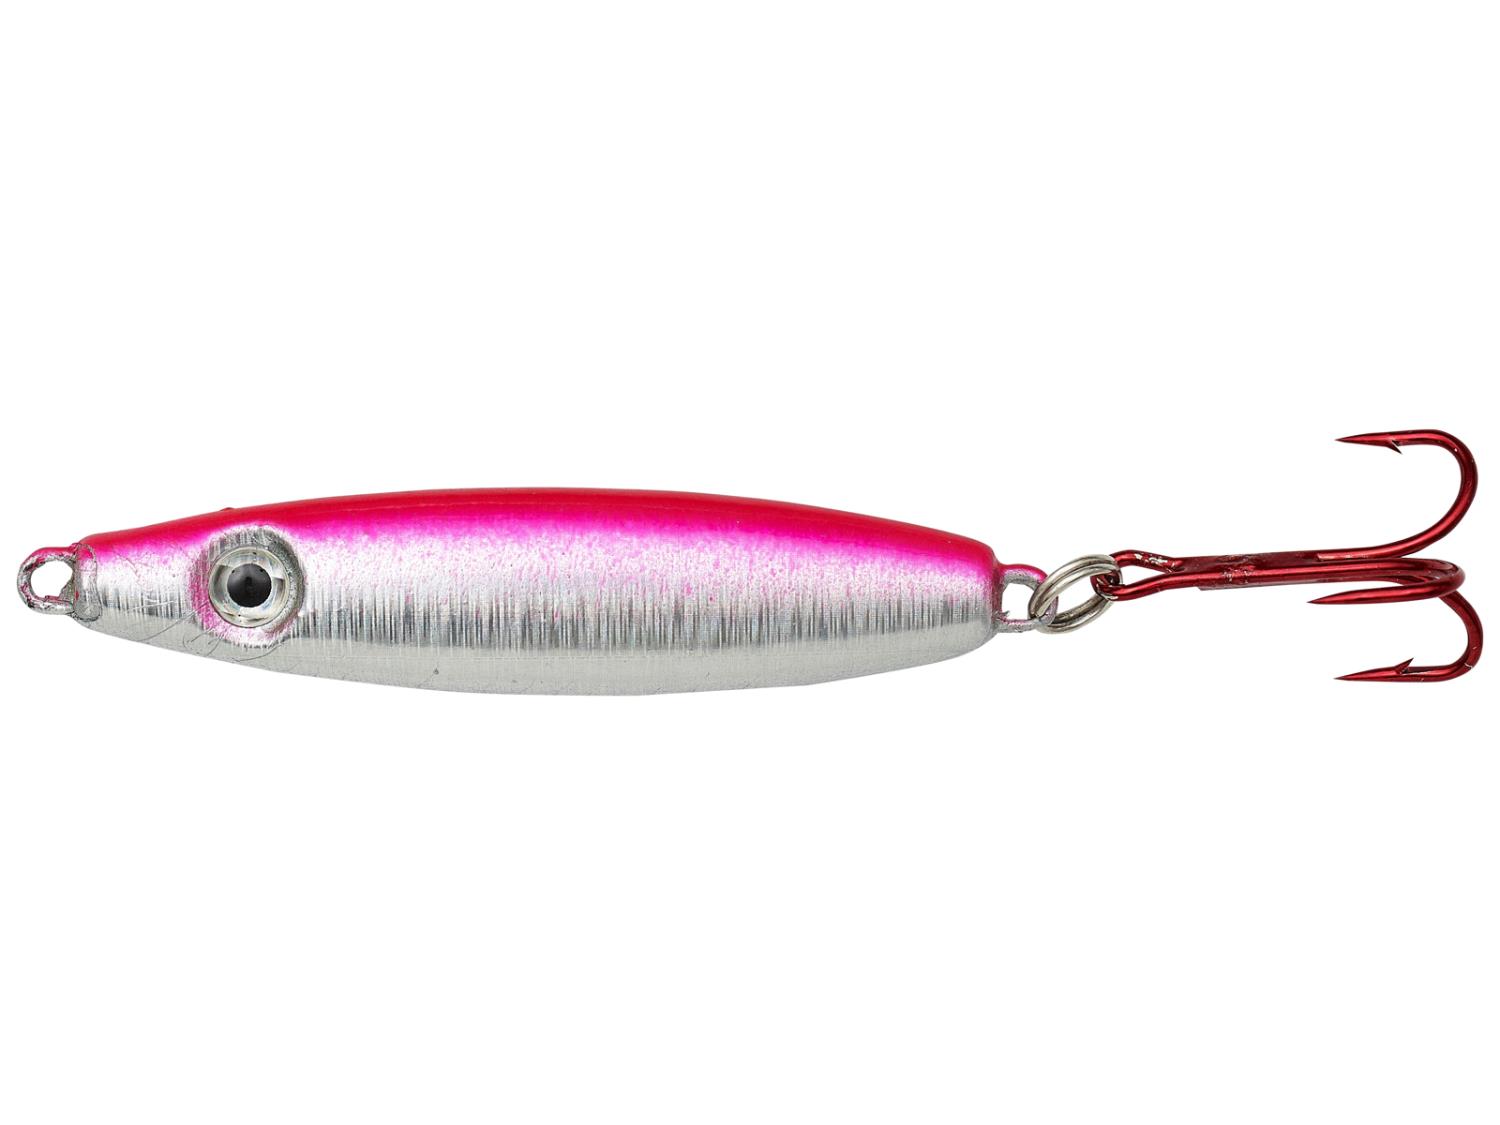 Kinetic Crazy herring 28g Pink/Crystal